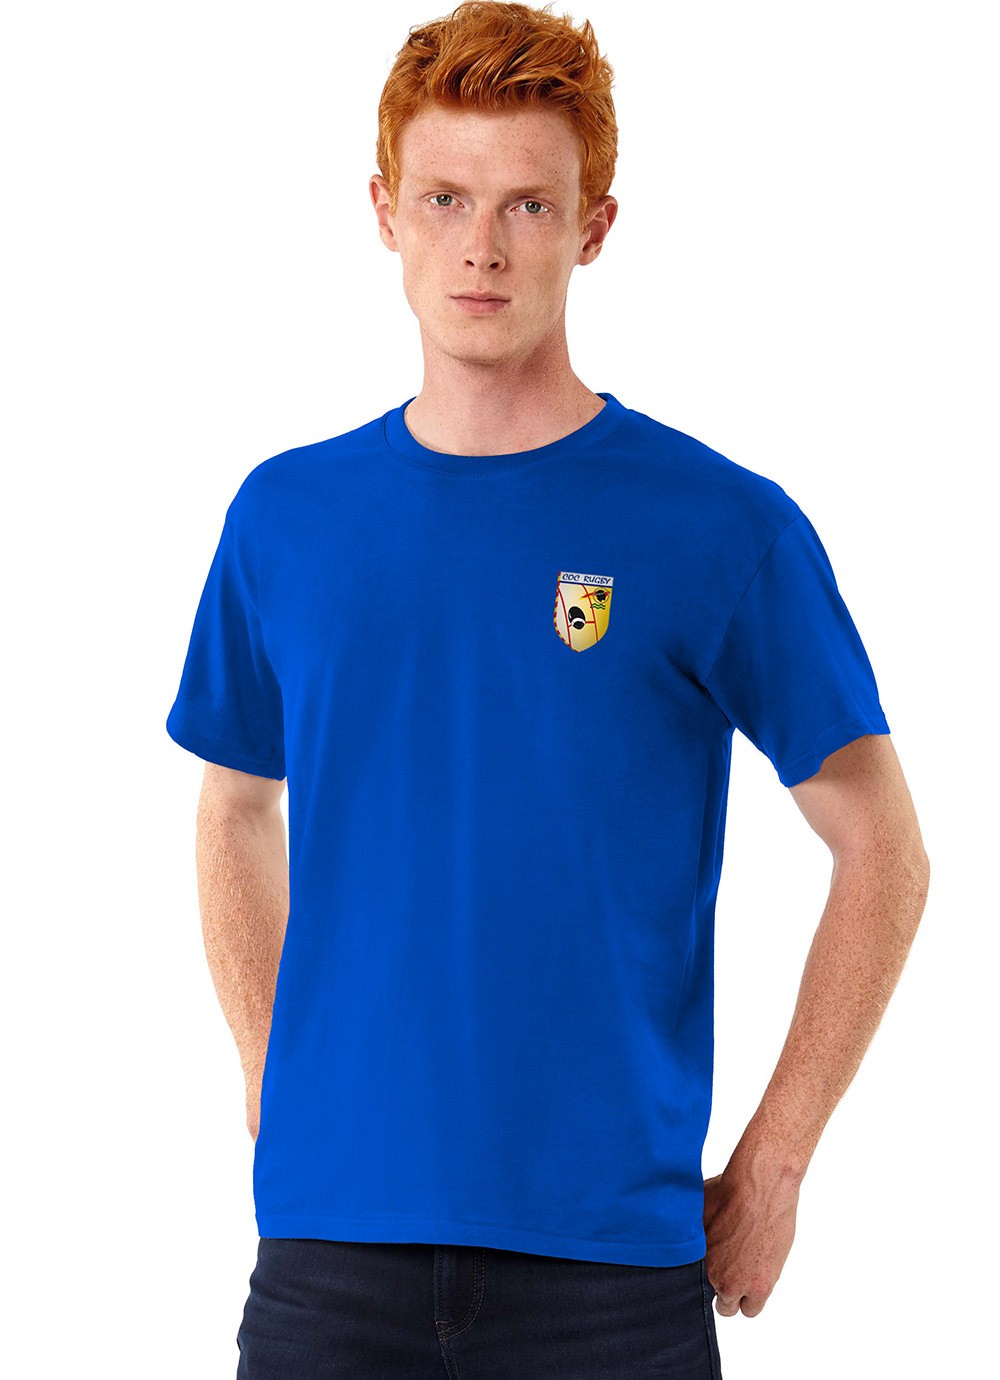 Tshirt homme COC Rugby XV bleu roi